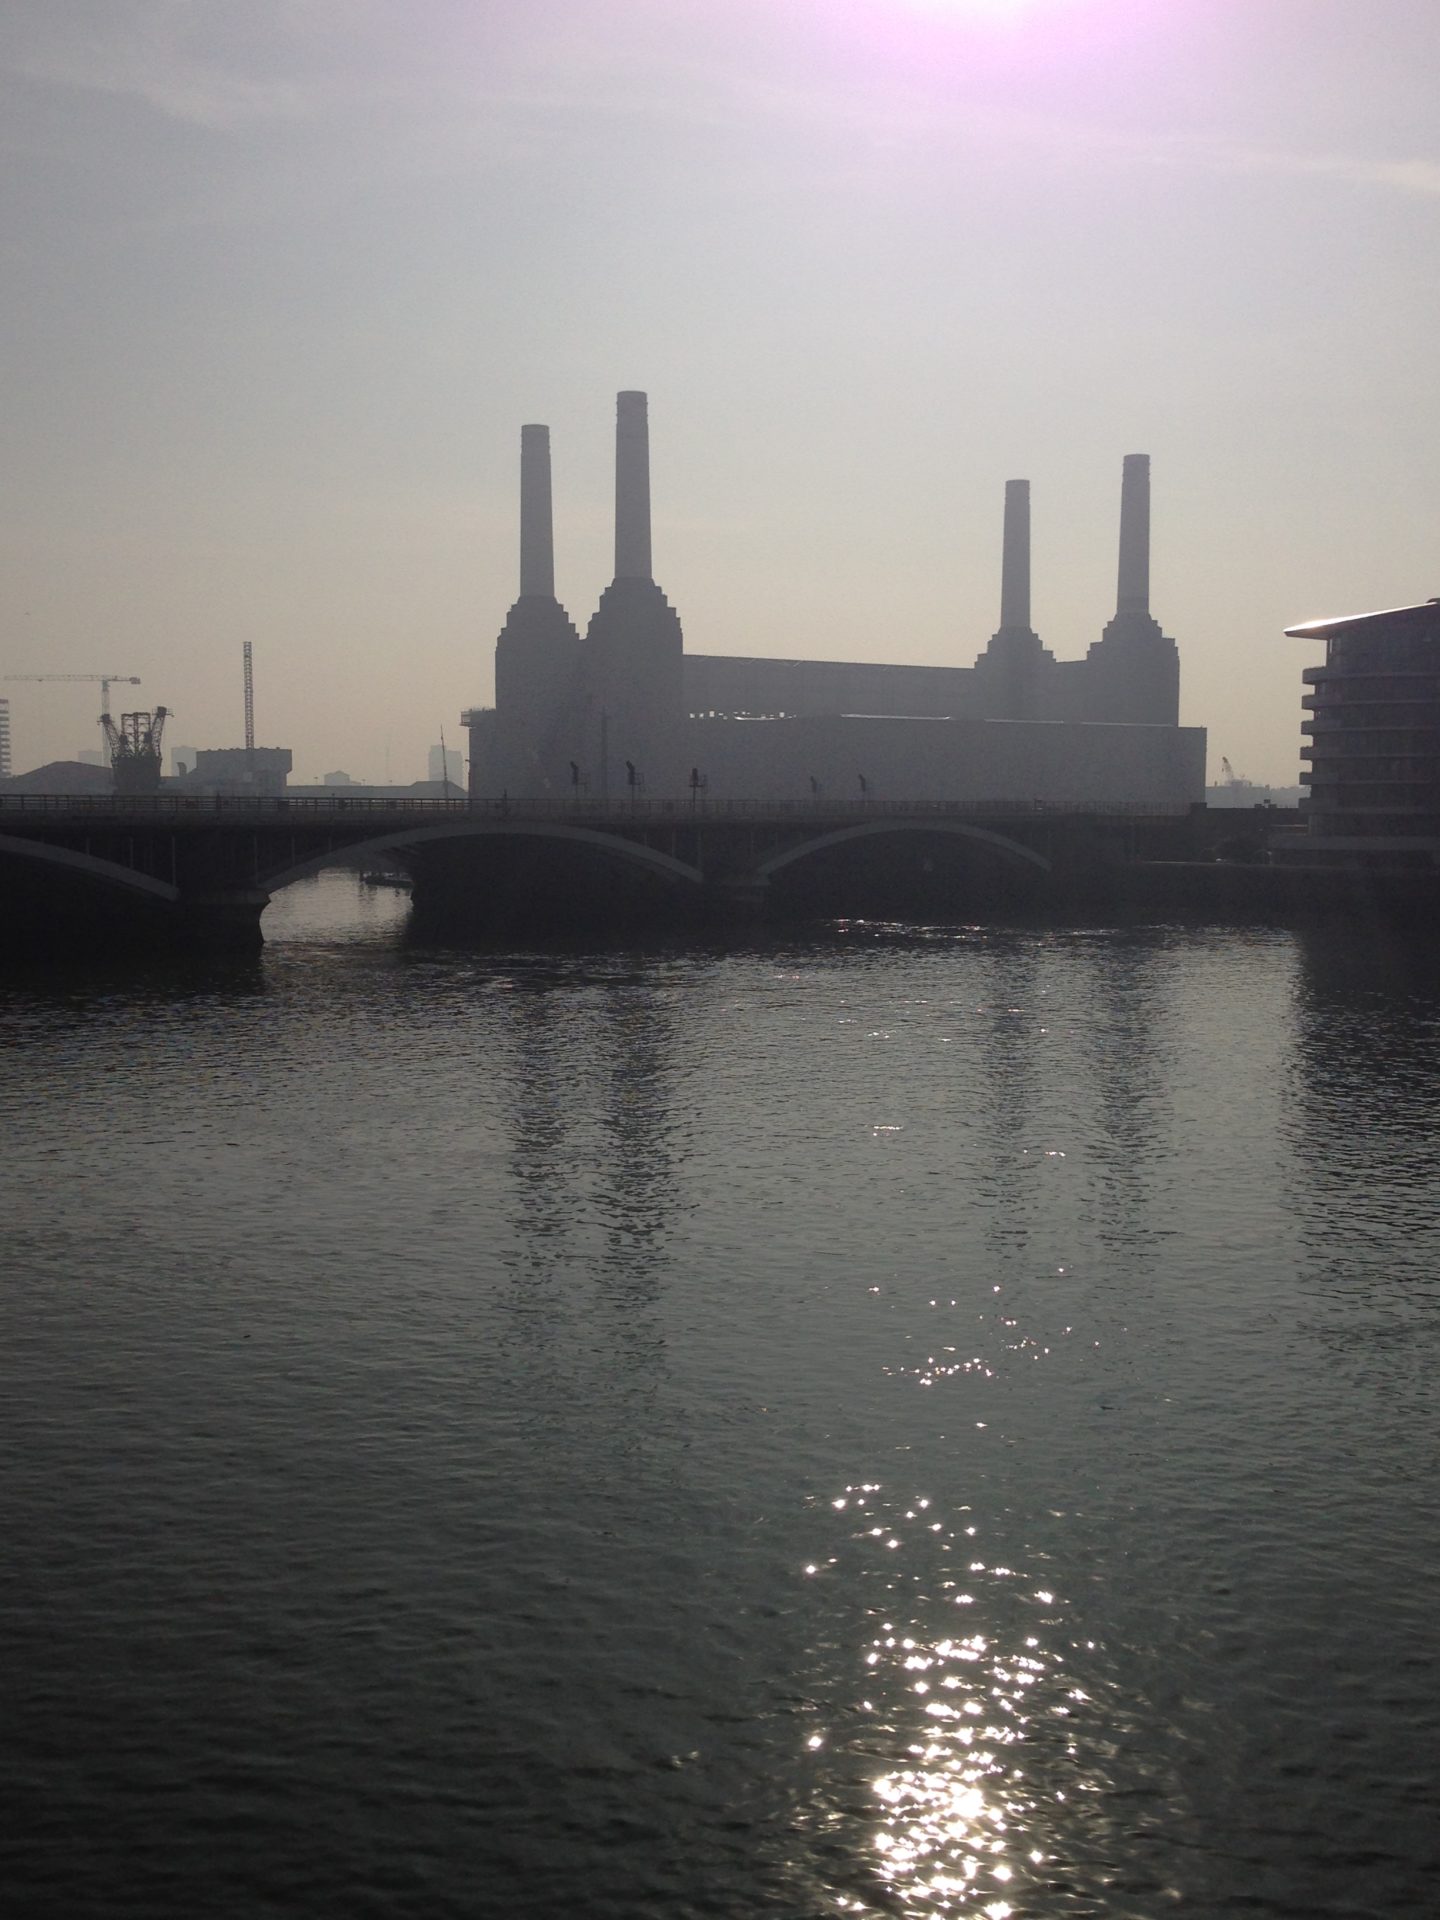 Flash fiction: Battersea Power Station